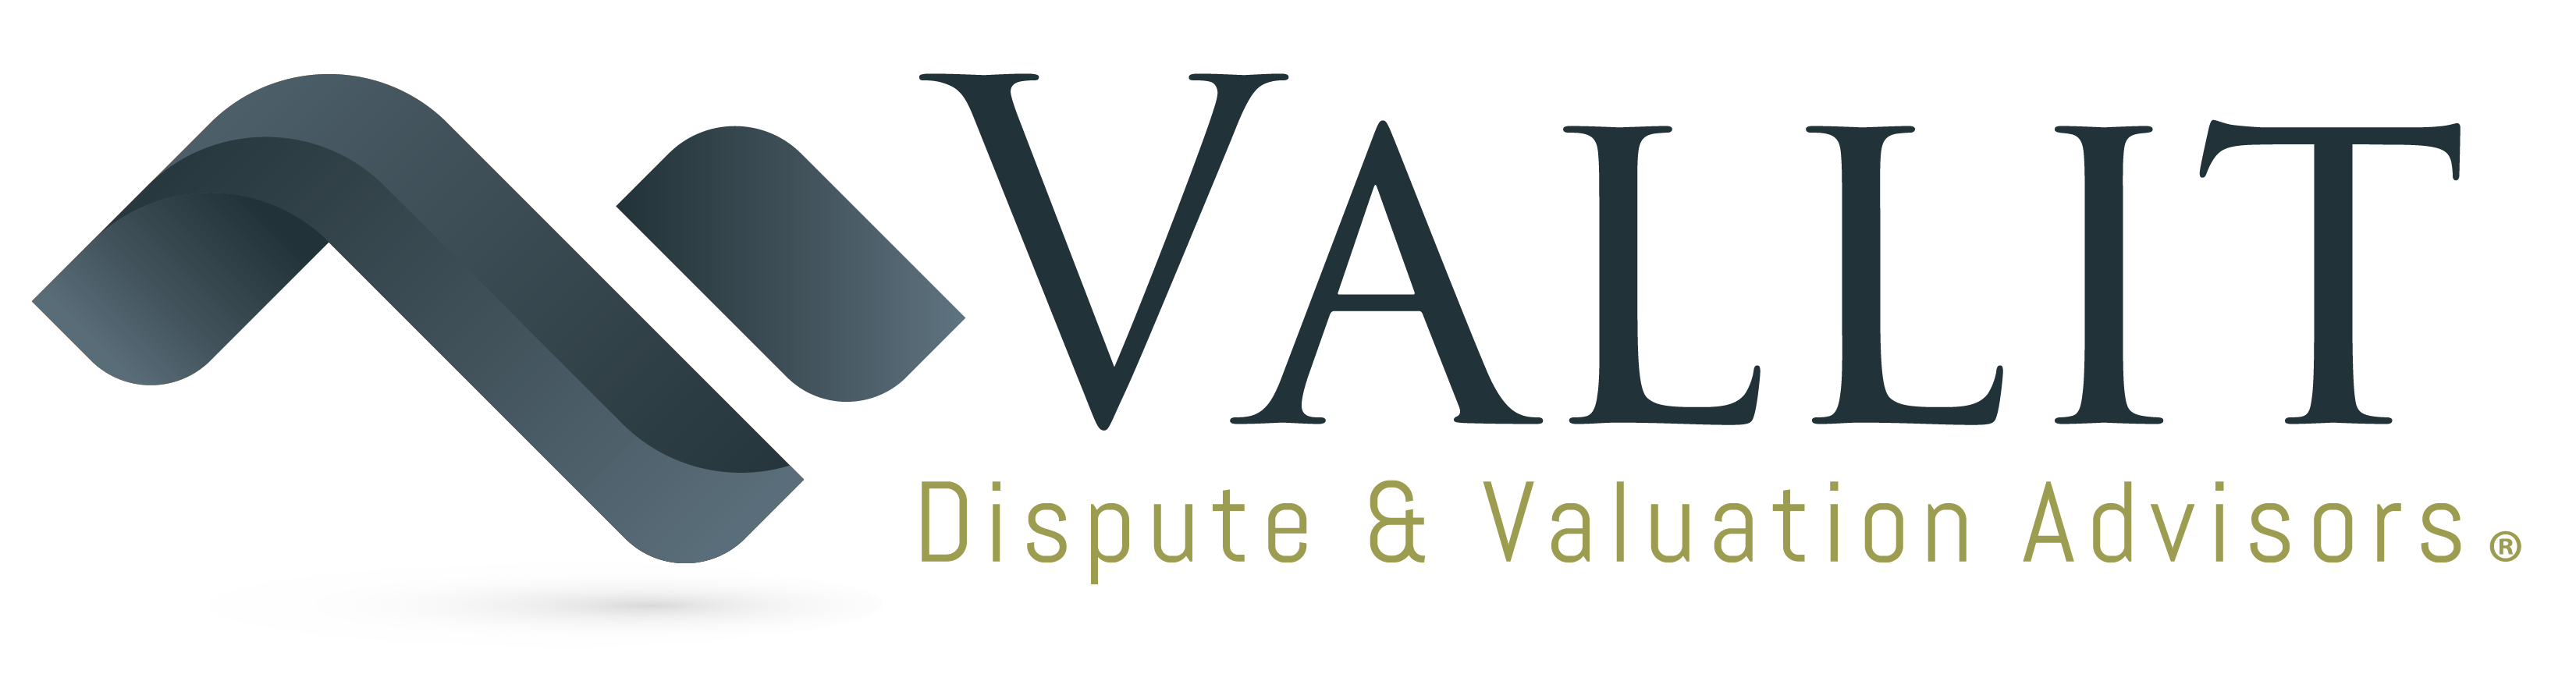 Vallit_Logo_Full_Round2